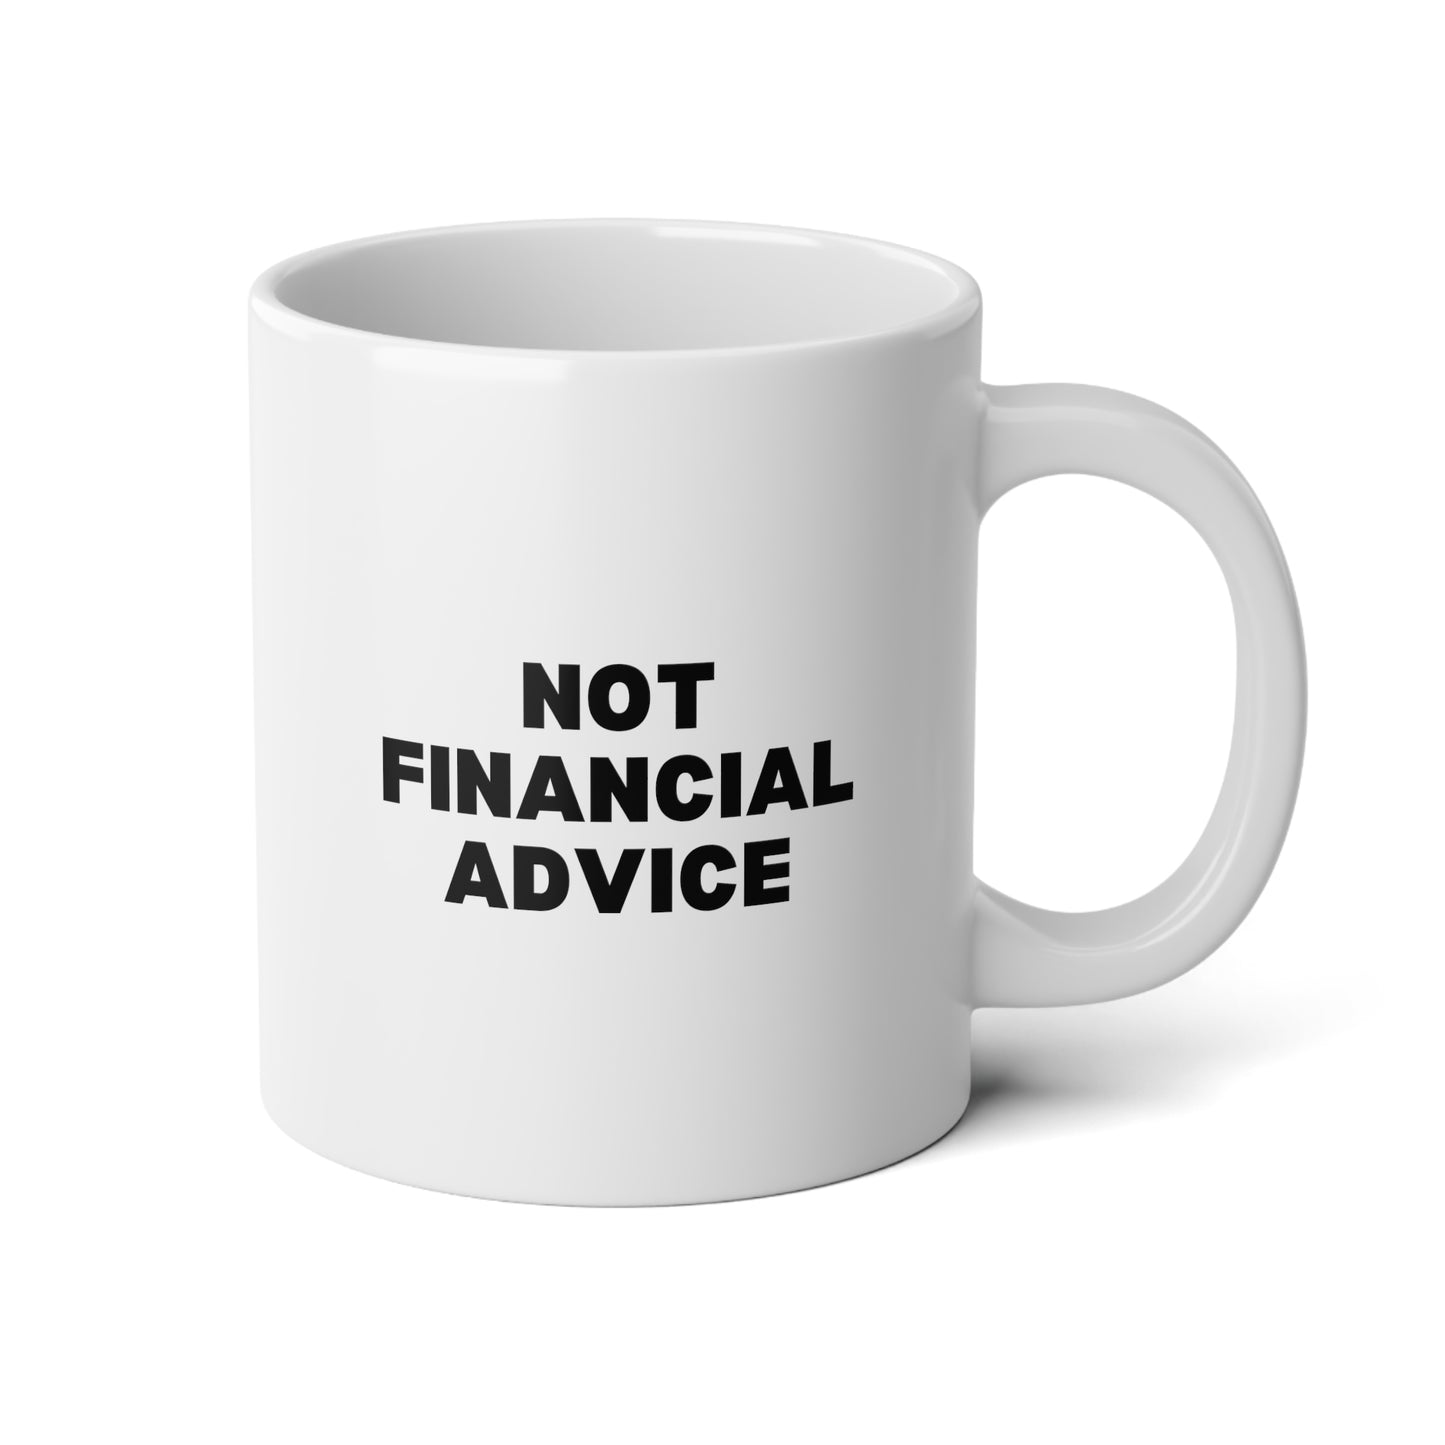 Not Financial Advice 20oz white funny large coffee mug gift for finance bro advisor specialist joke waveywares wavey wares wavywares wavy wares